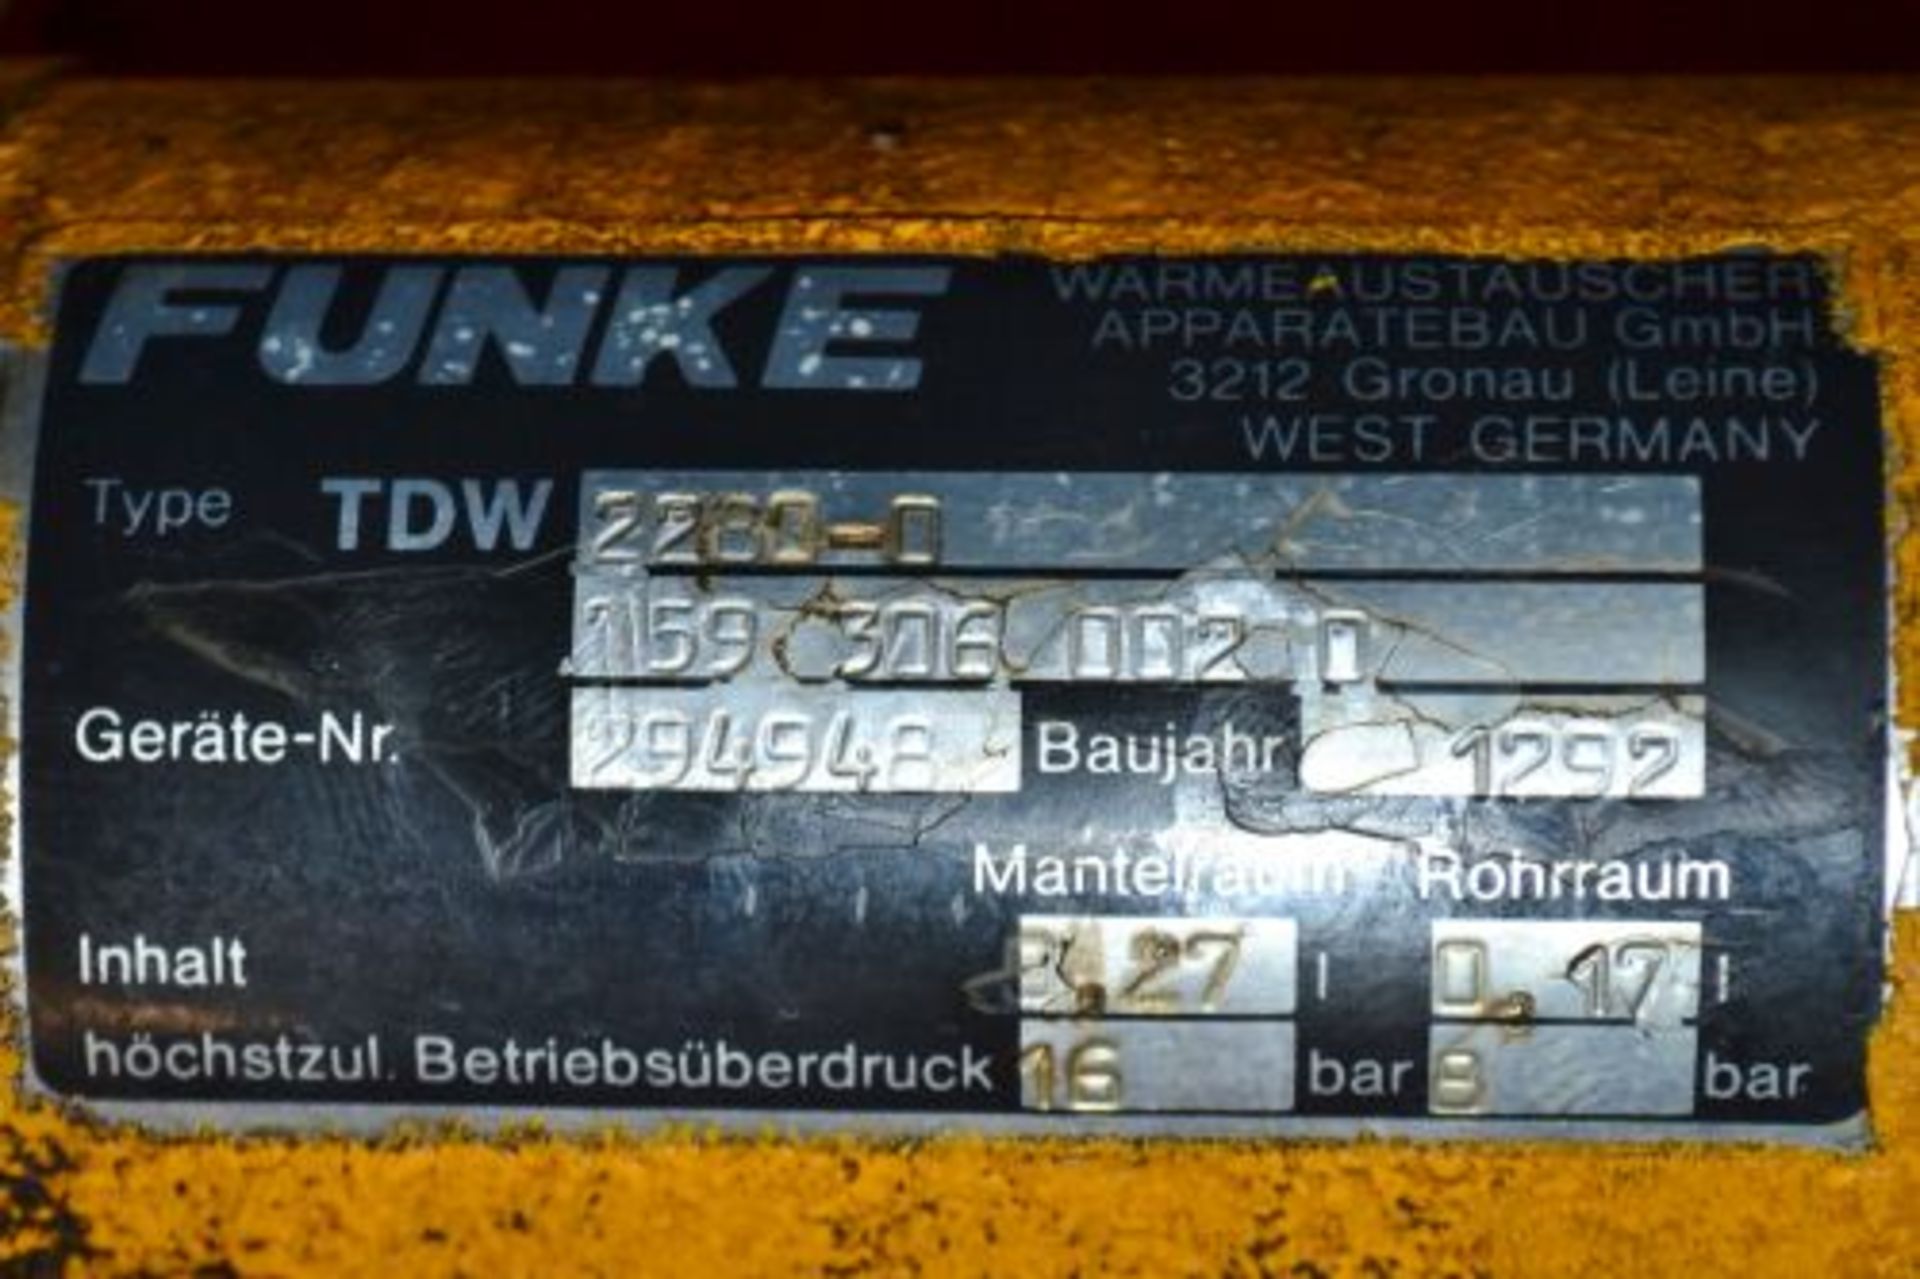 Schwerdtel hydraulic barrel press - Image 8 of 11